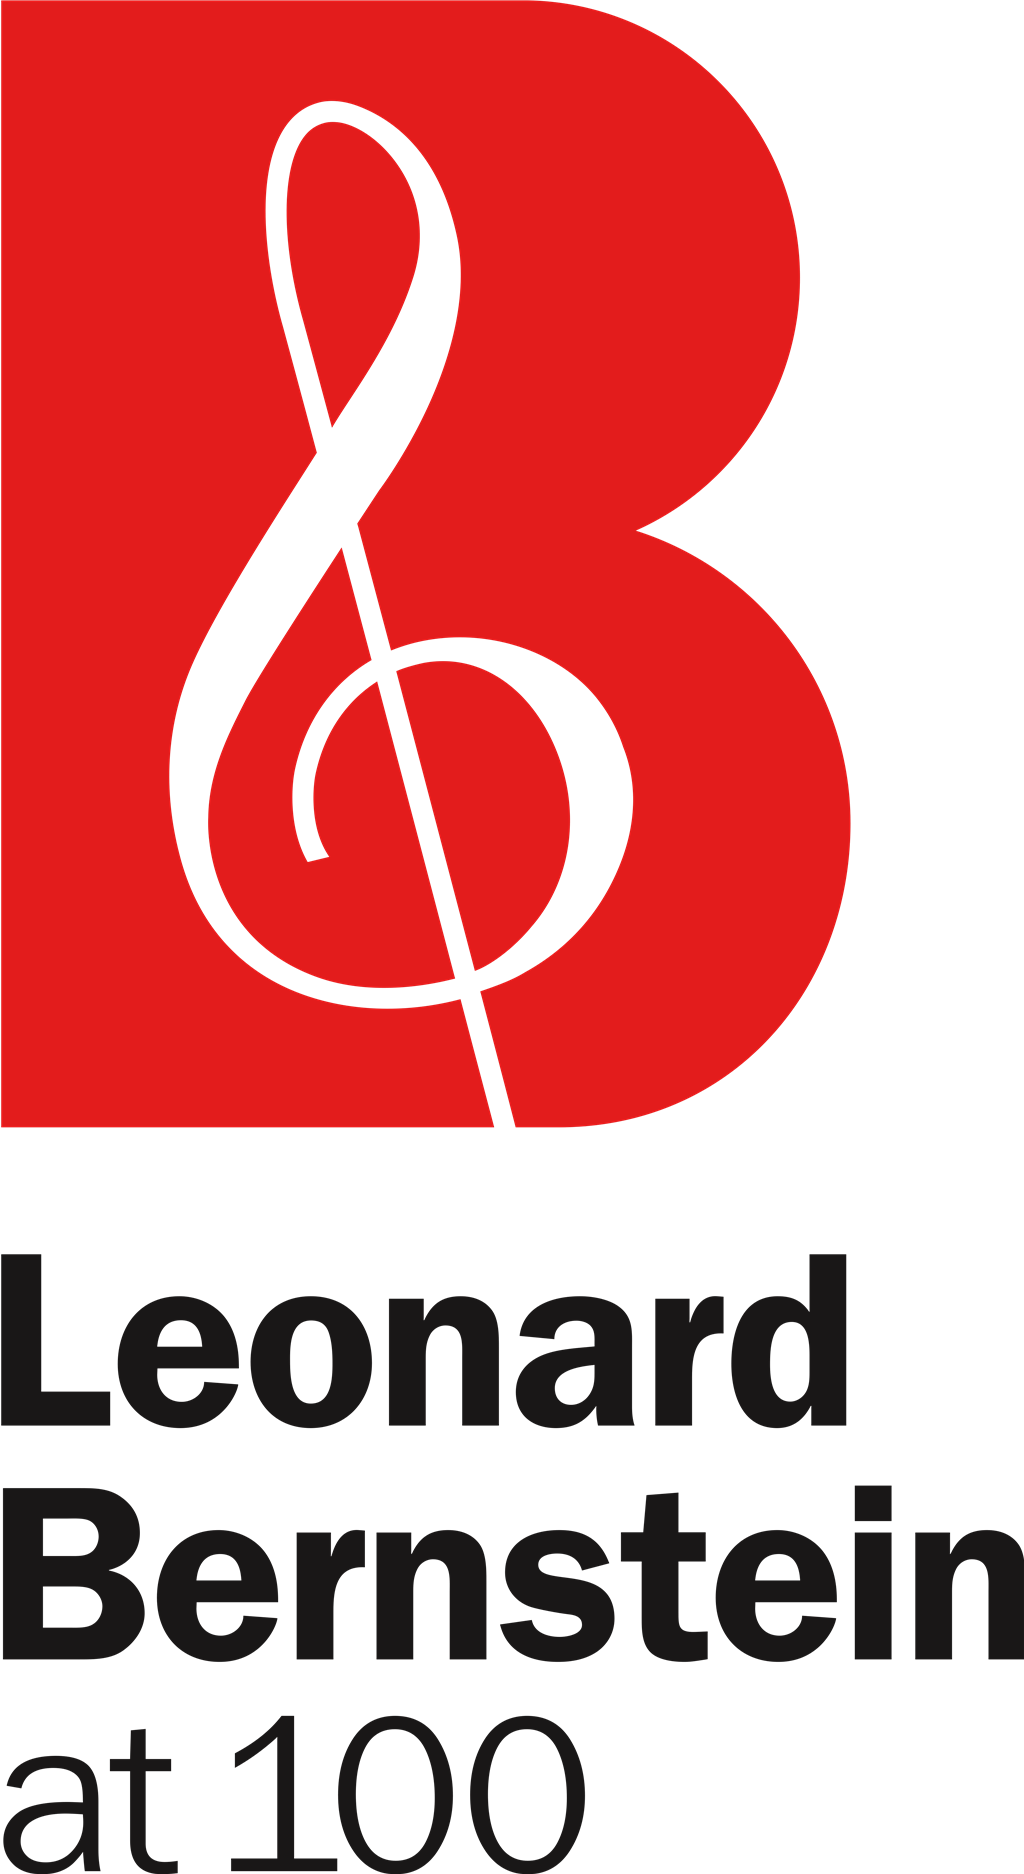 Leonard Bernstein logotype, transparent .png, medium, large